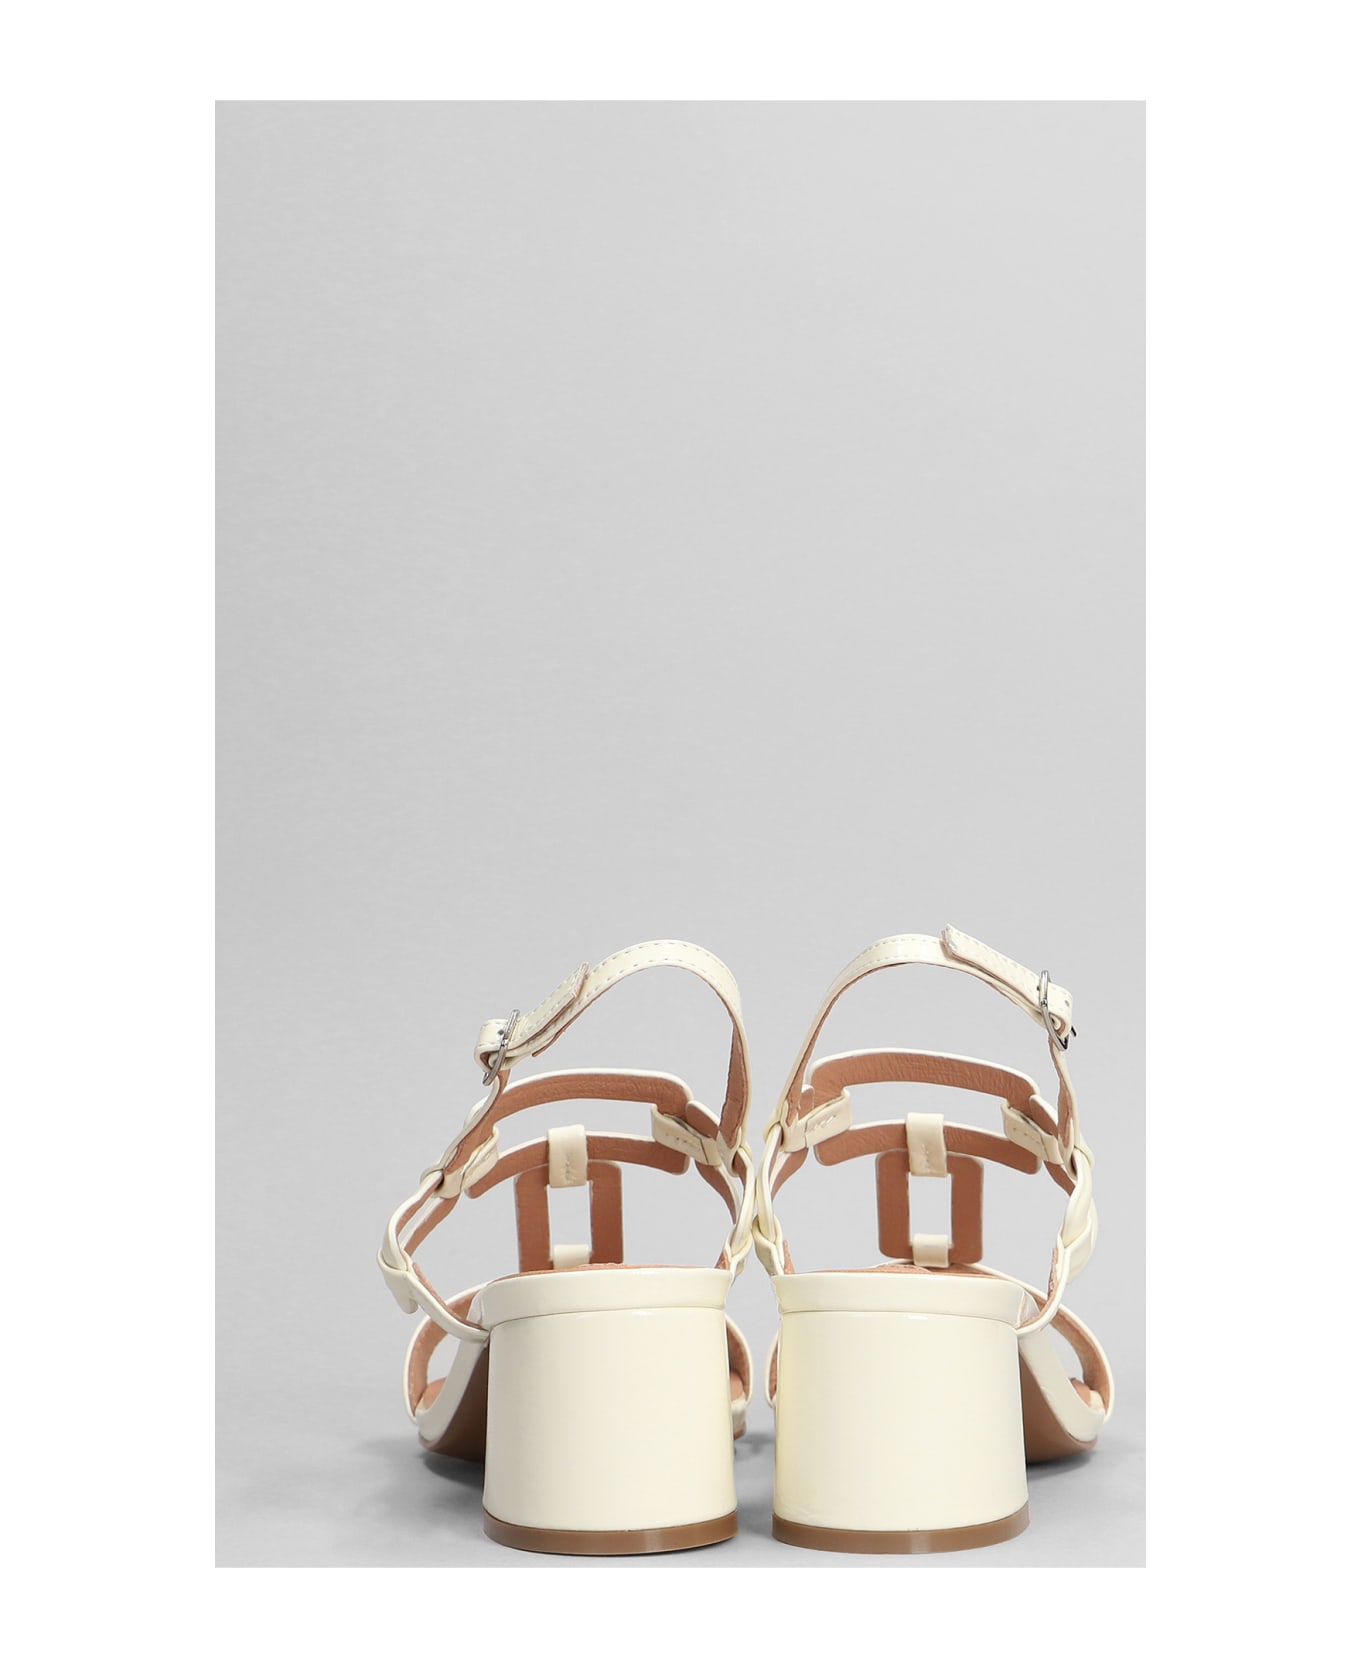 Bibi Lou Zinnia 50 Sandals In White Patent Leather - white